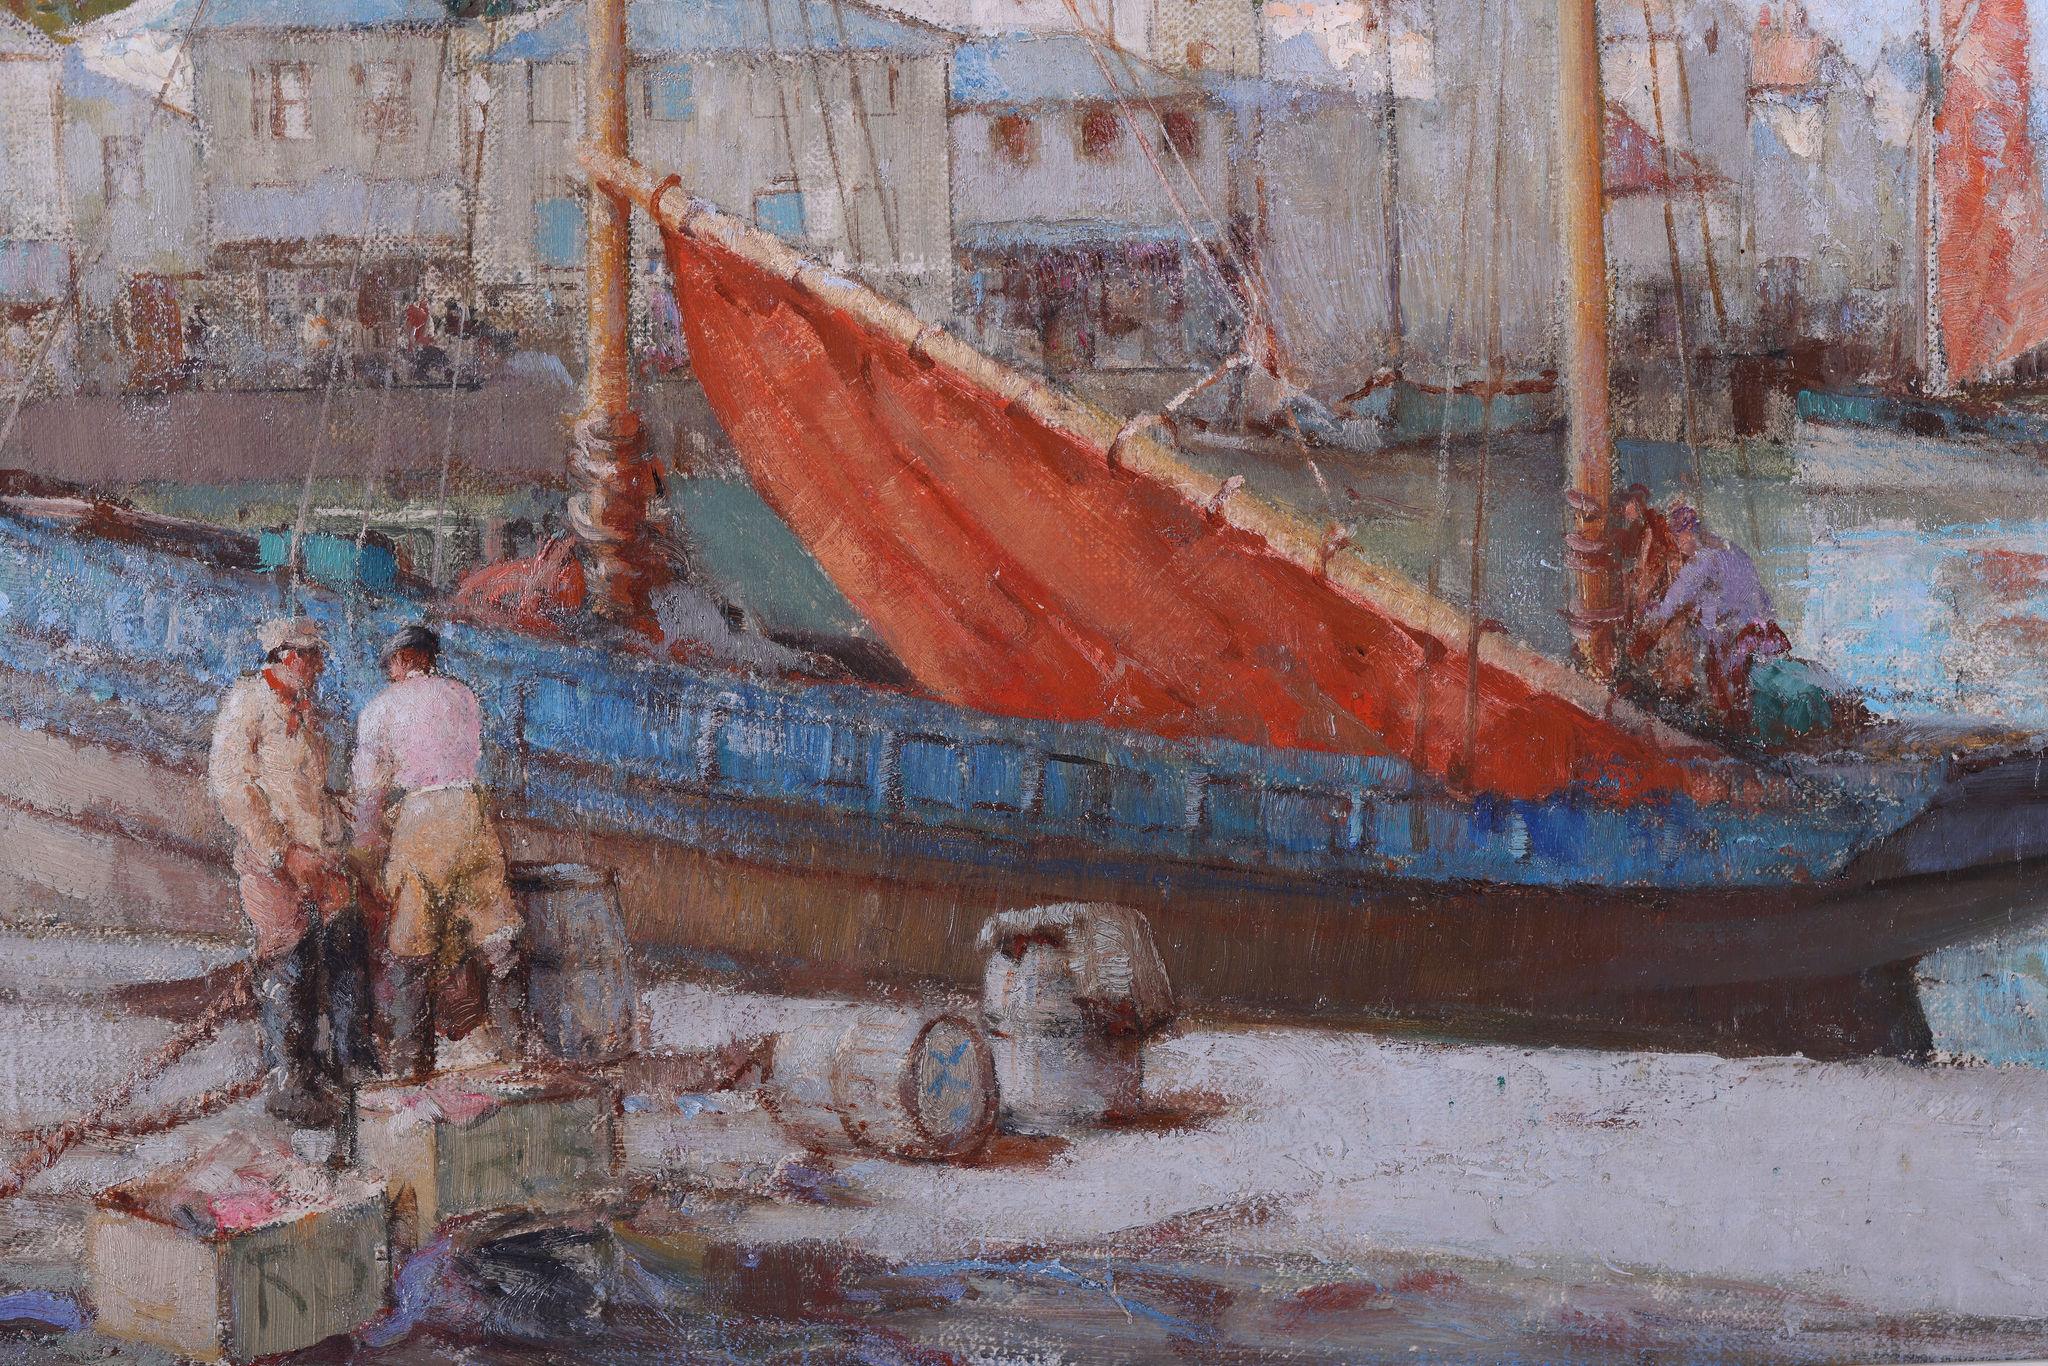 'Brixham Harbour, Devon' an antique oil painting - Impressionist Painting by William Lee Hankey